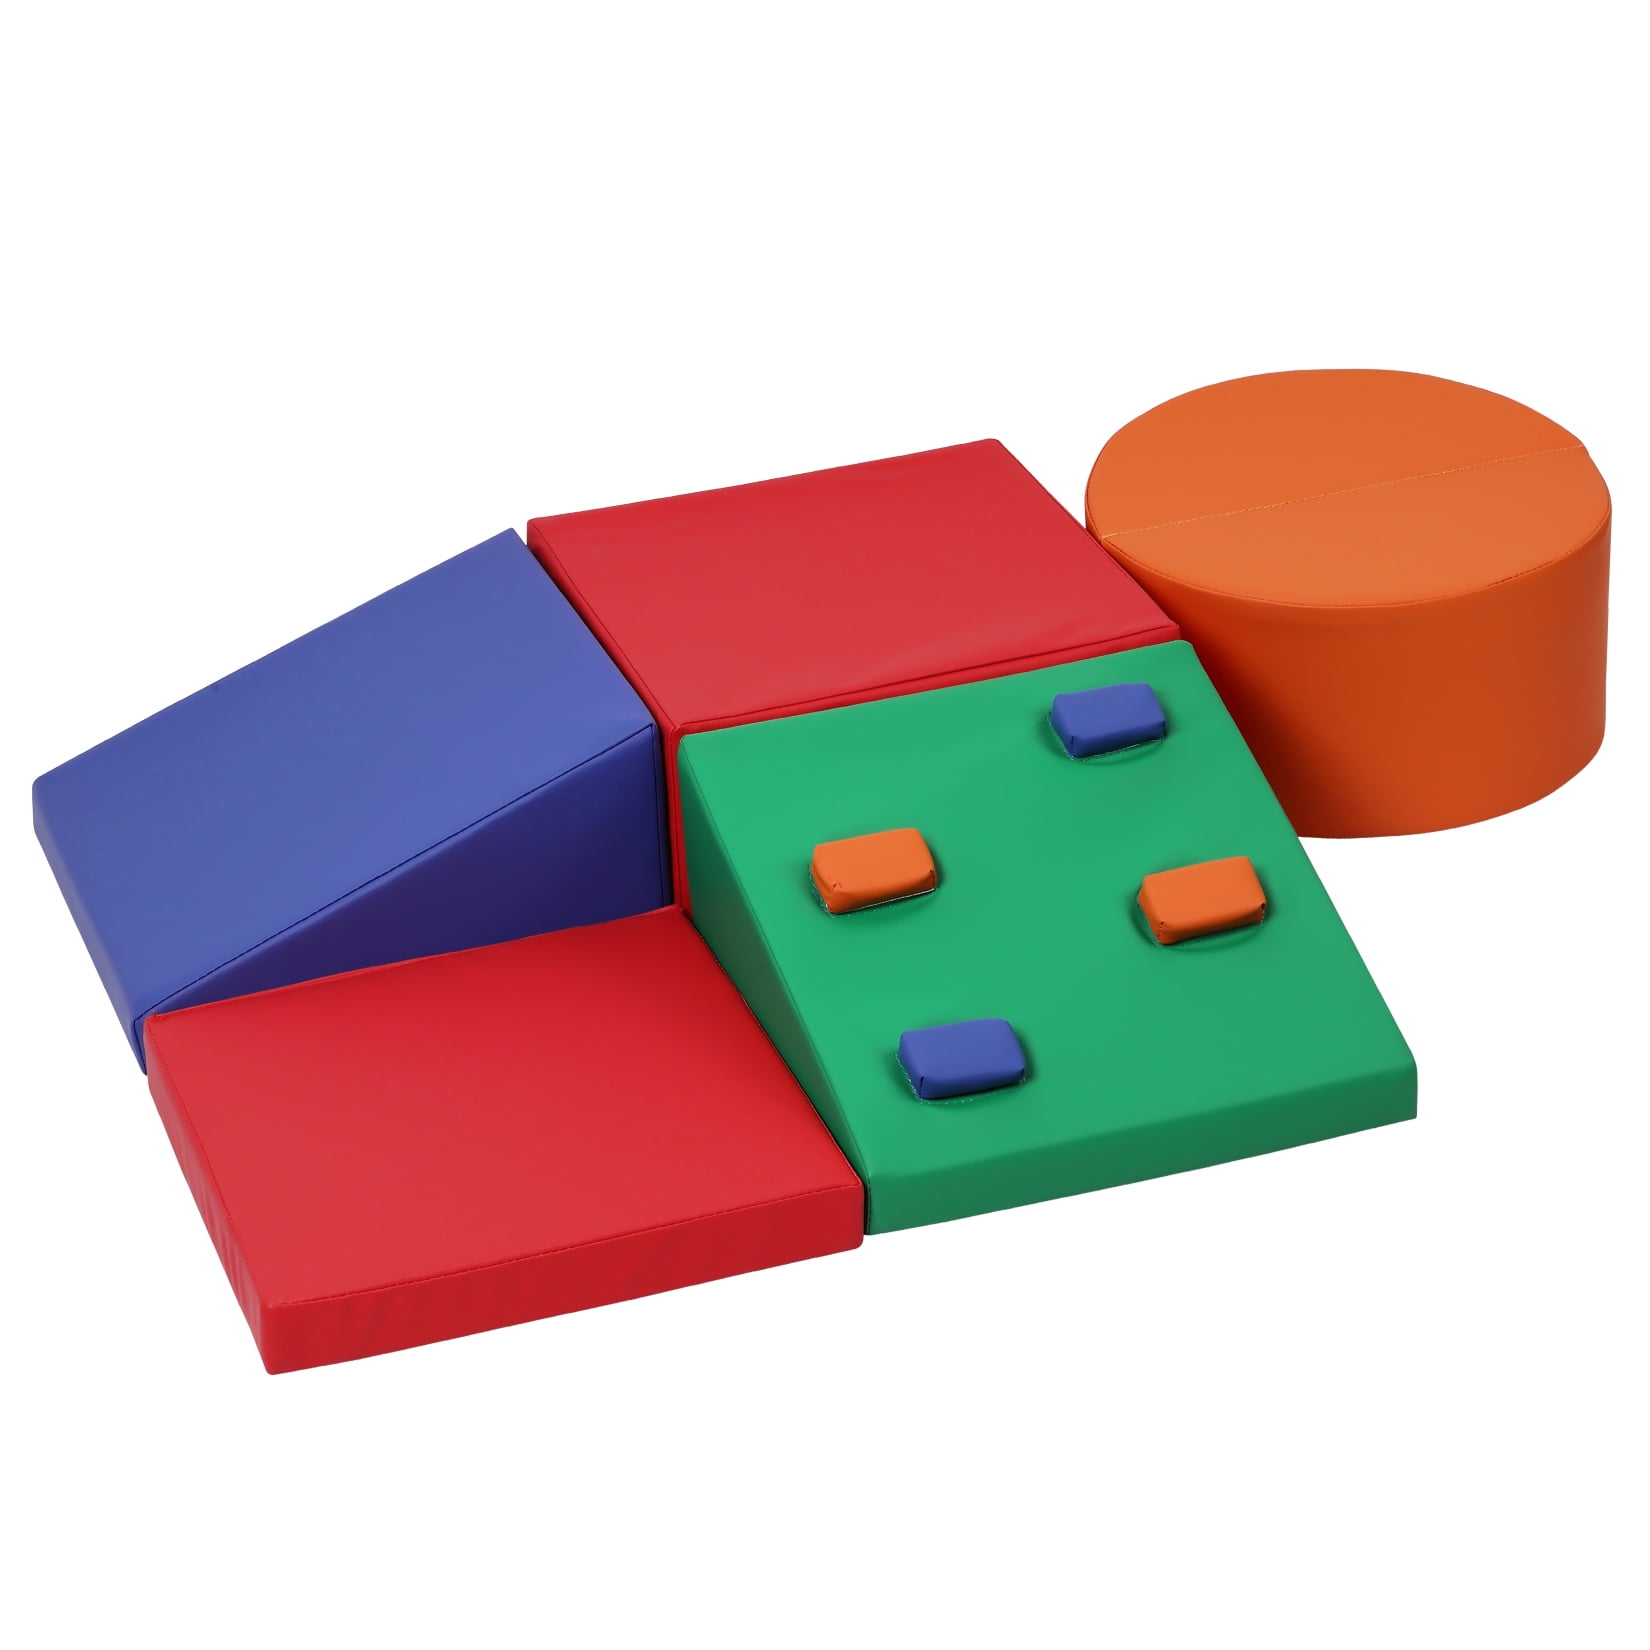 Soft Climbing Set,Foam Climbing Blocks for Toddlers , Climbing, Crawling Play Set,5PCS - image 1 of 7